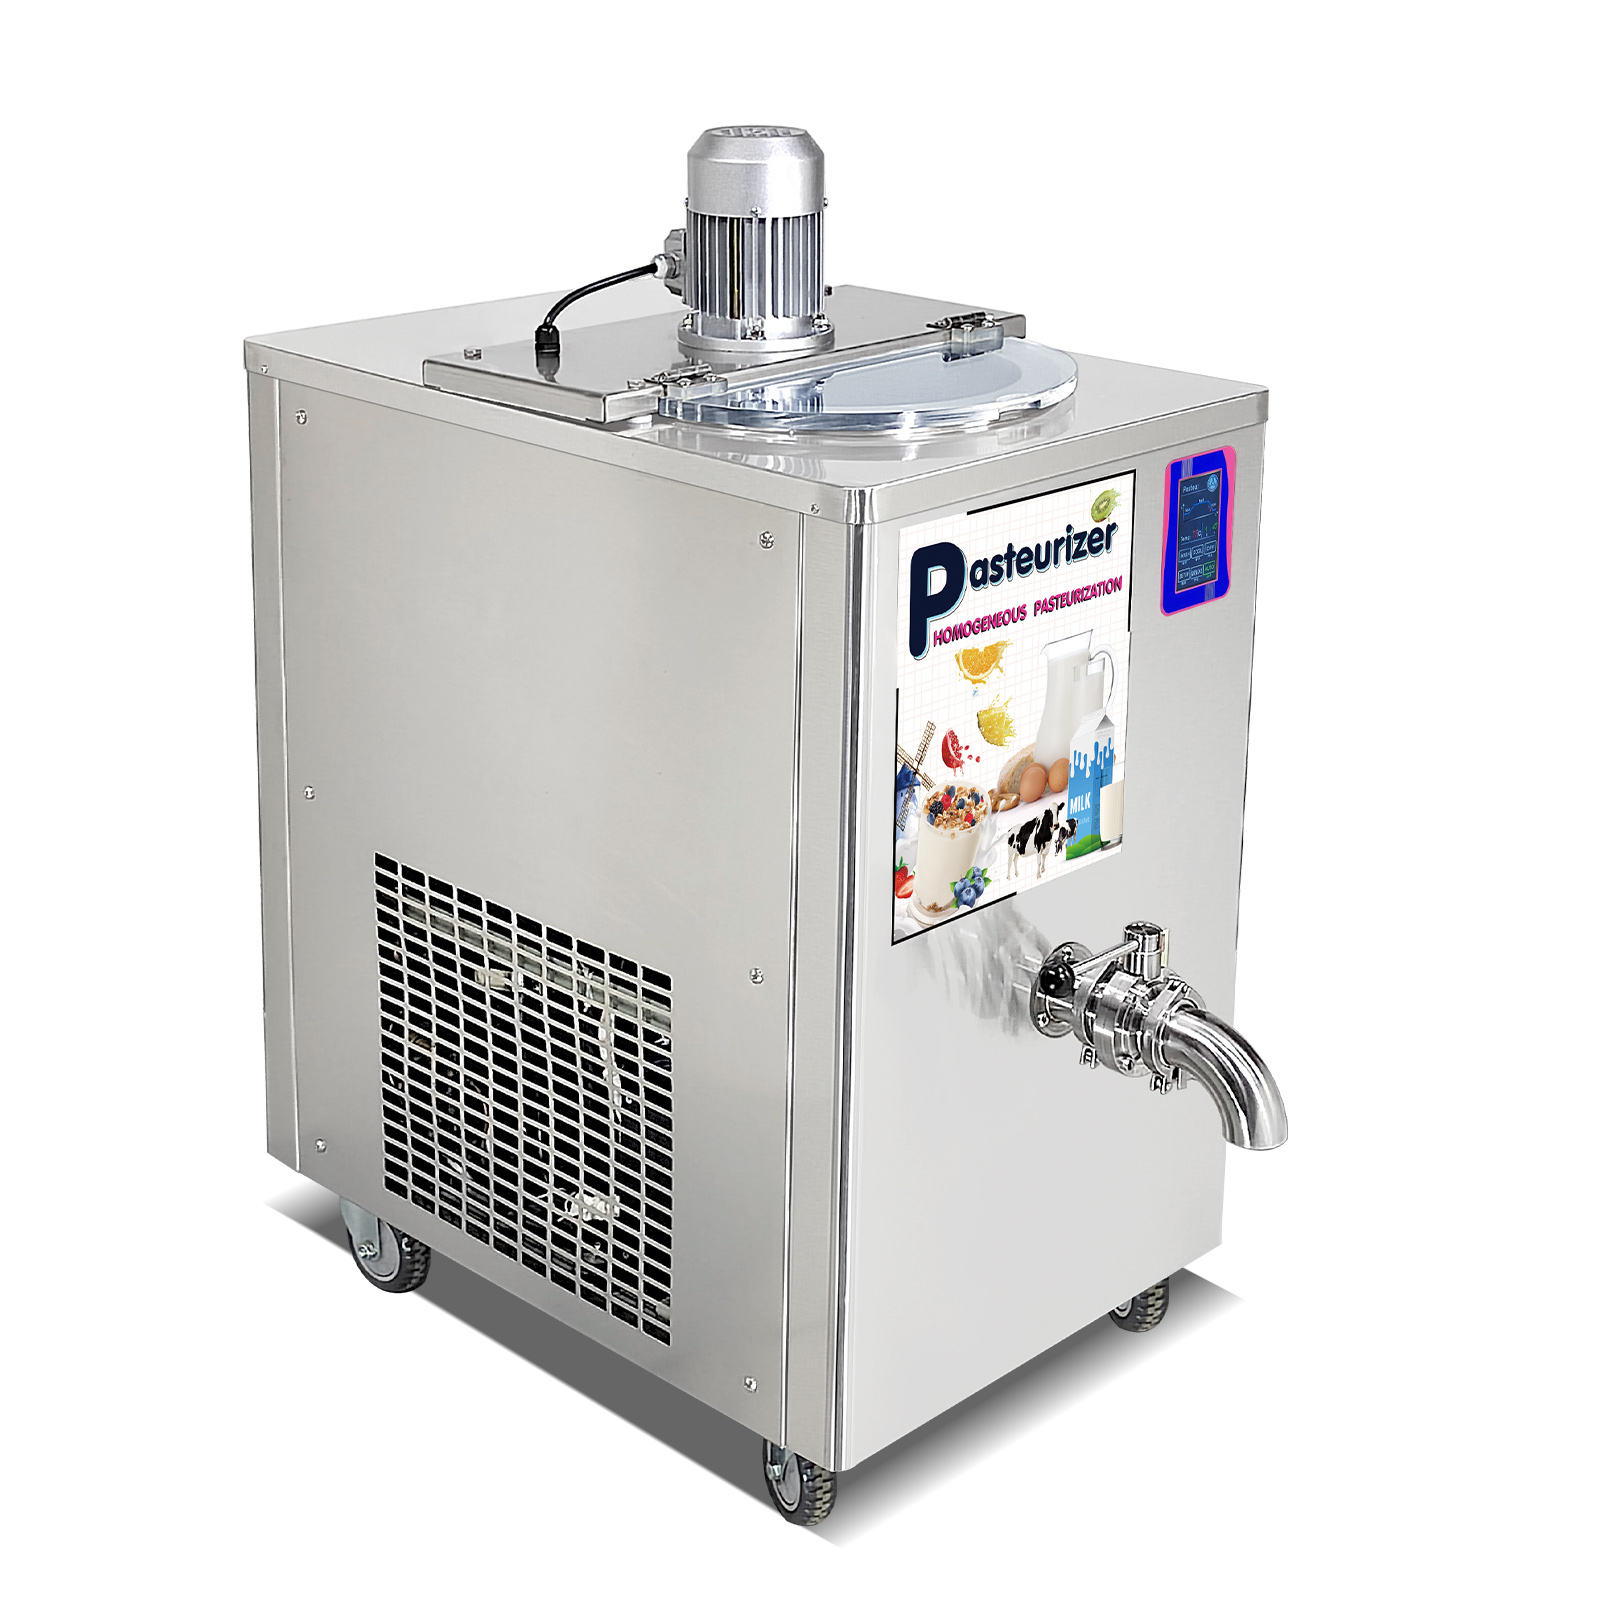 36L Low and High Milk Juice Temperature Pasteurization Machine/Milk Pasteurizer/Milksterilization Machine with refrigeration - milk pasteurizer - 14